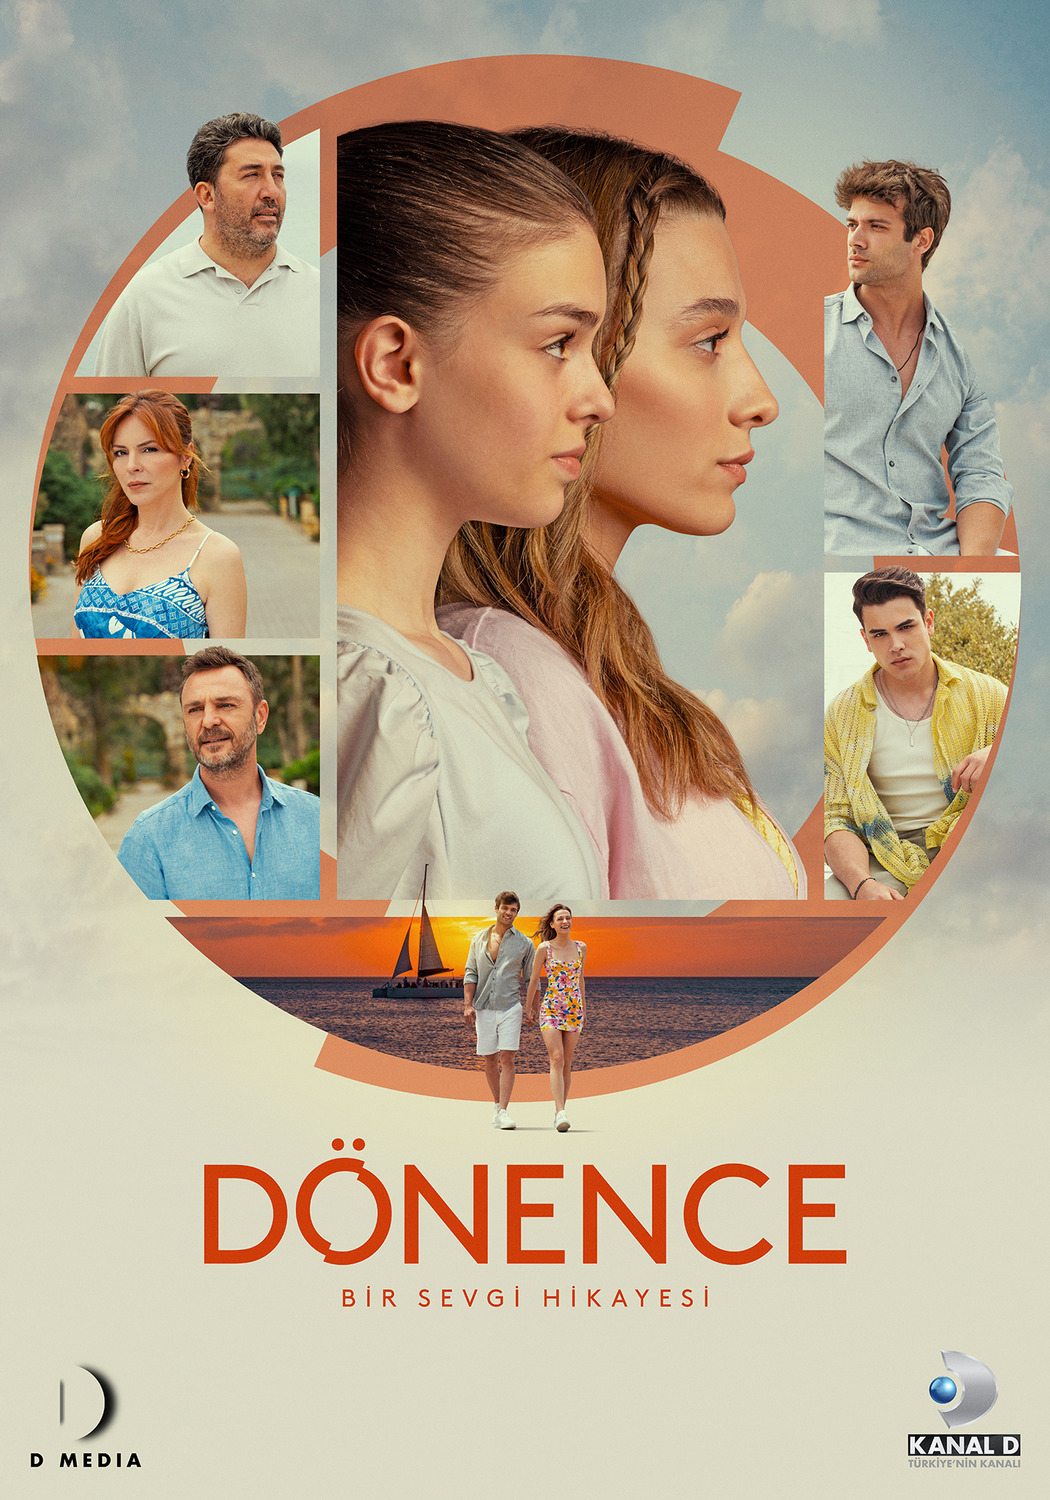 Extra Large TV Poster Image for Dönence 